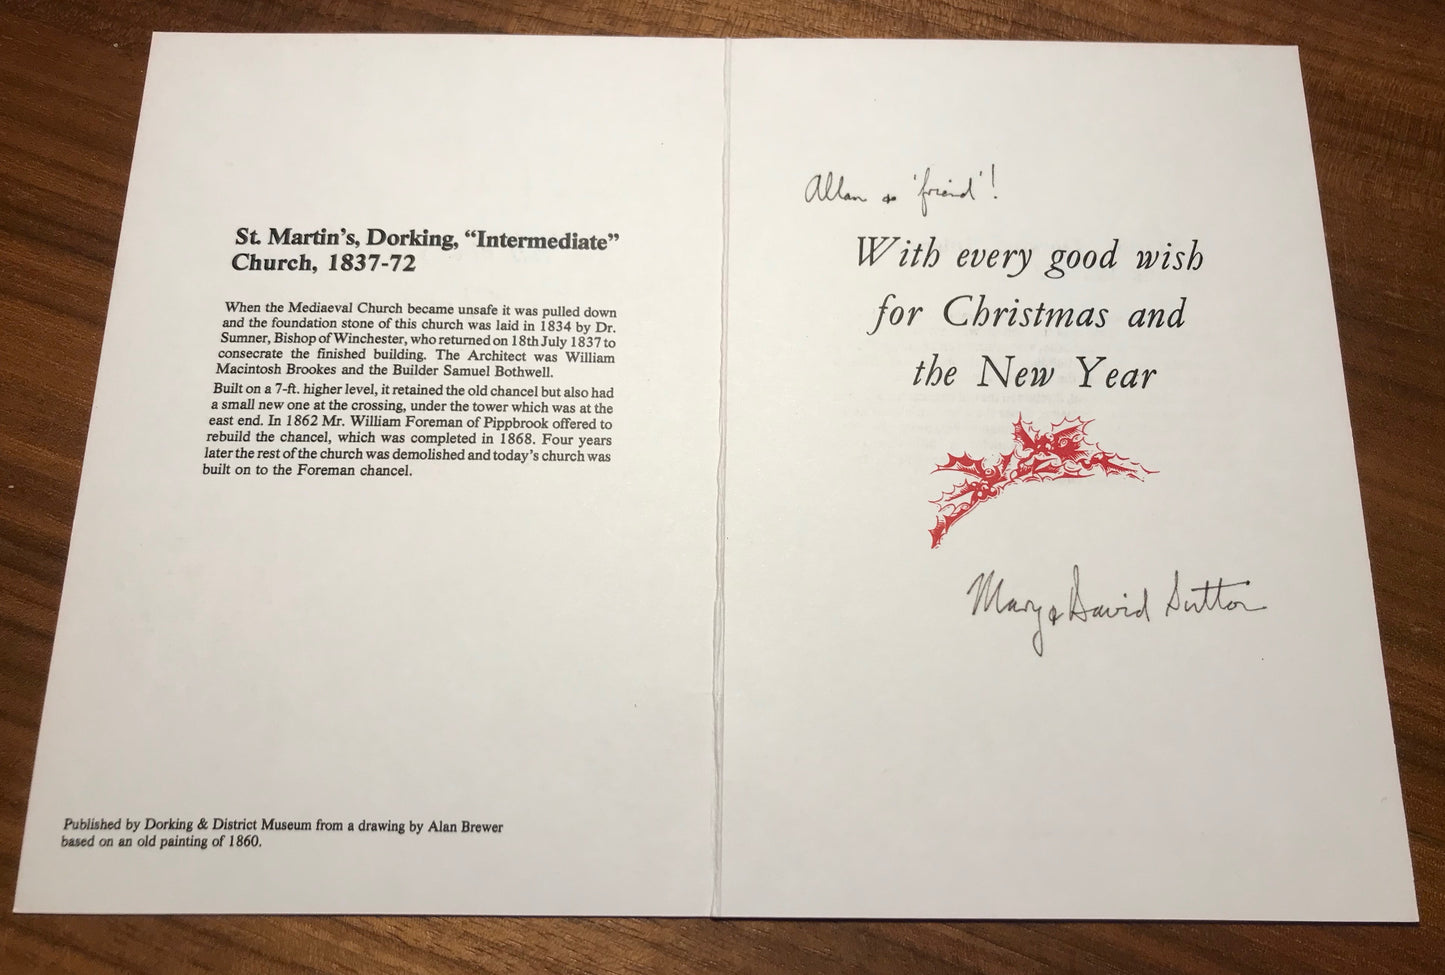 Christmas Card of St. Martin's "Intermediate" Church